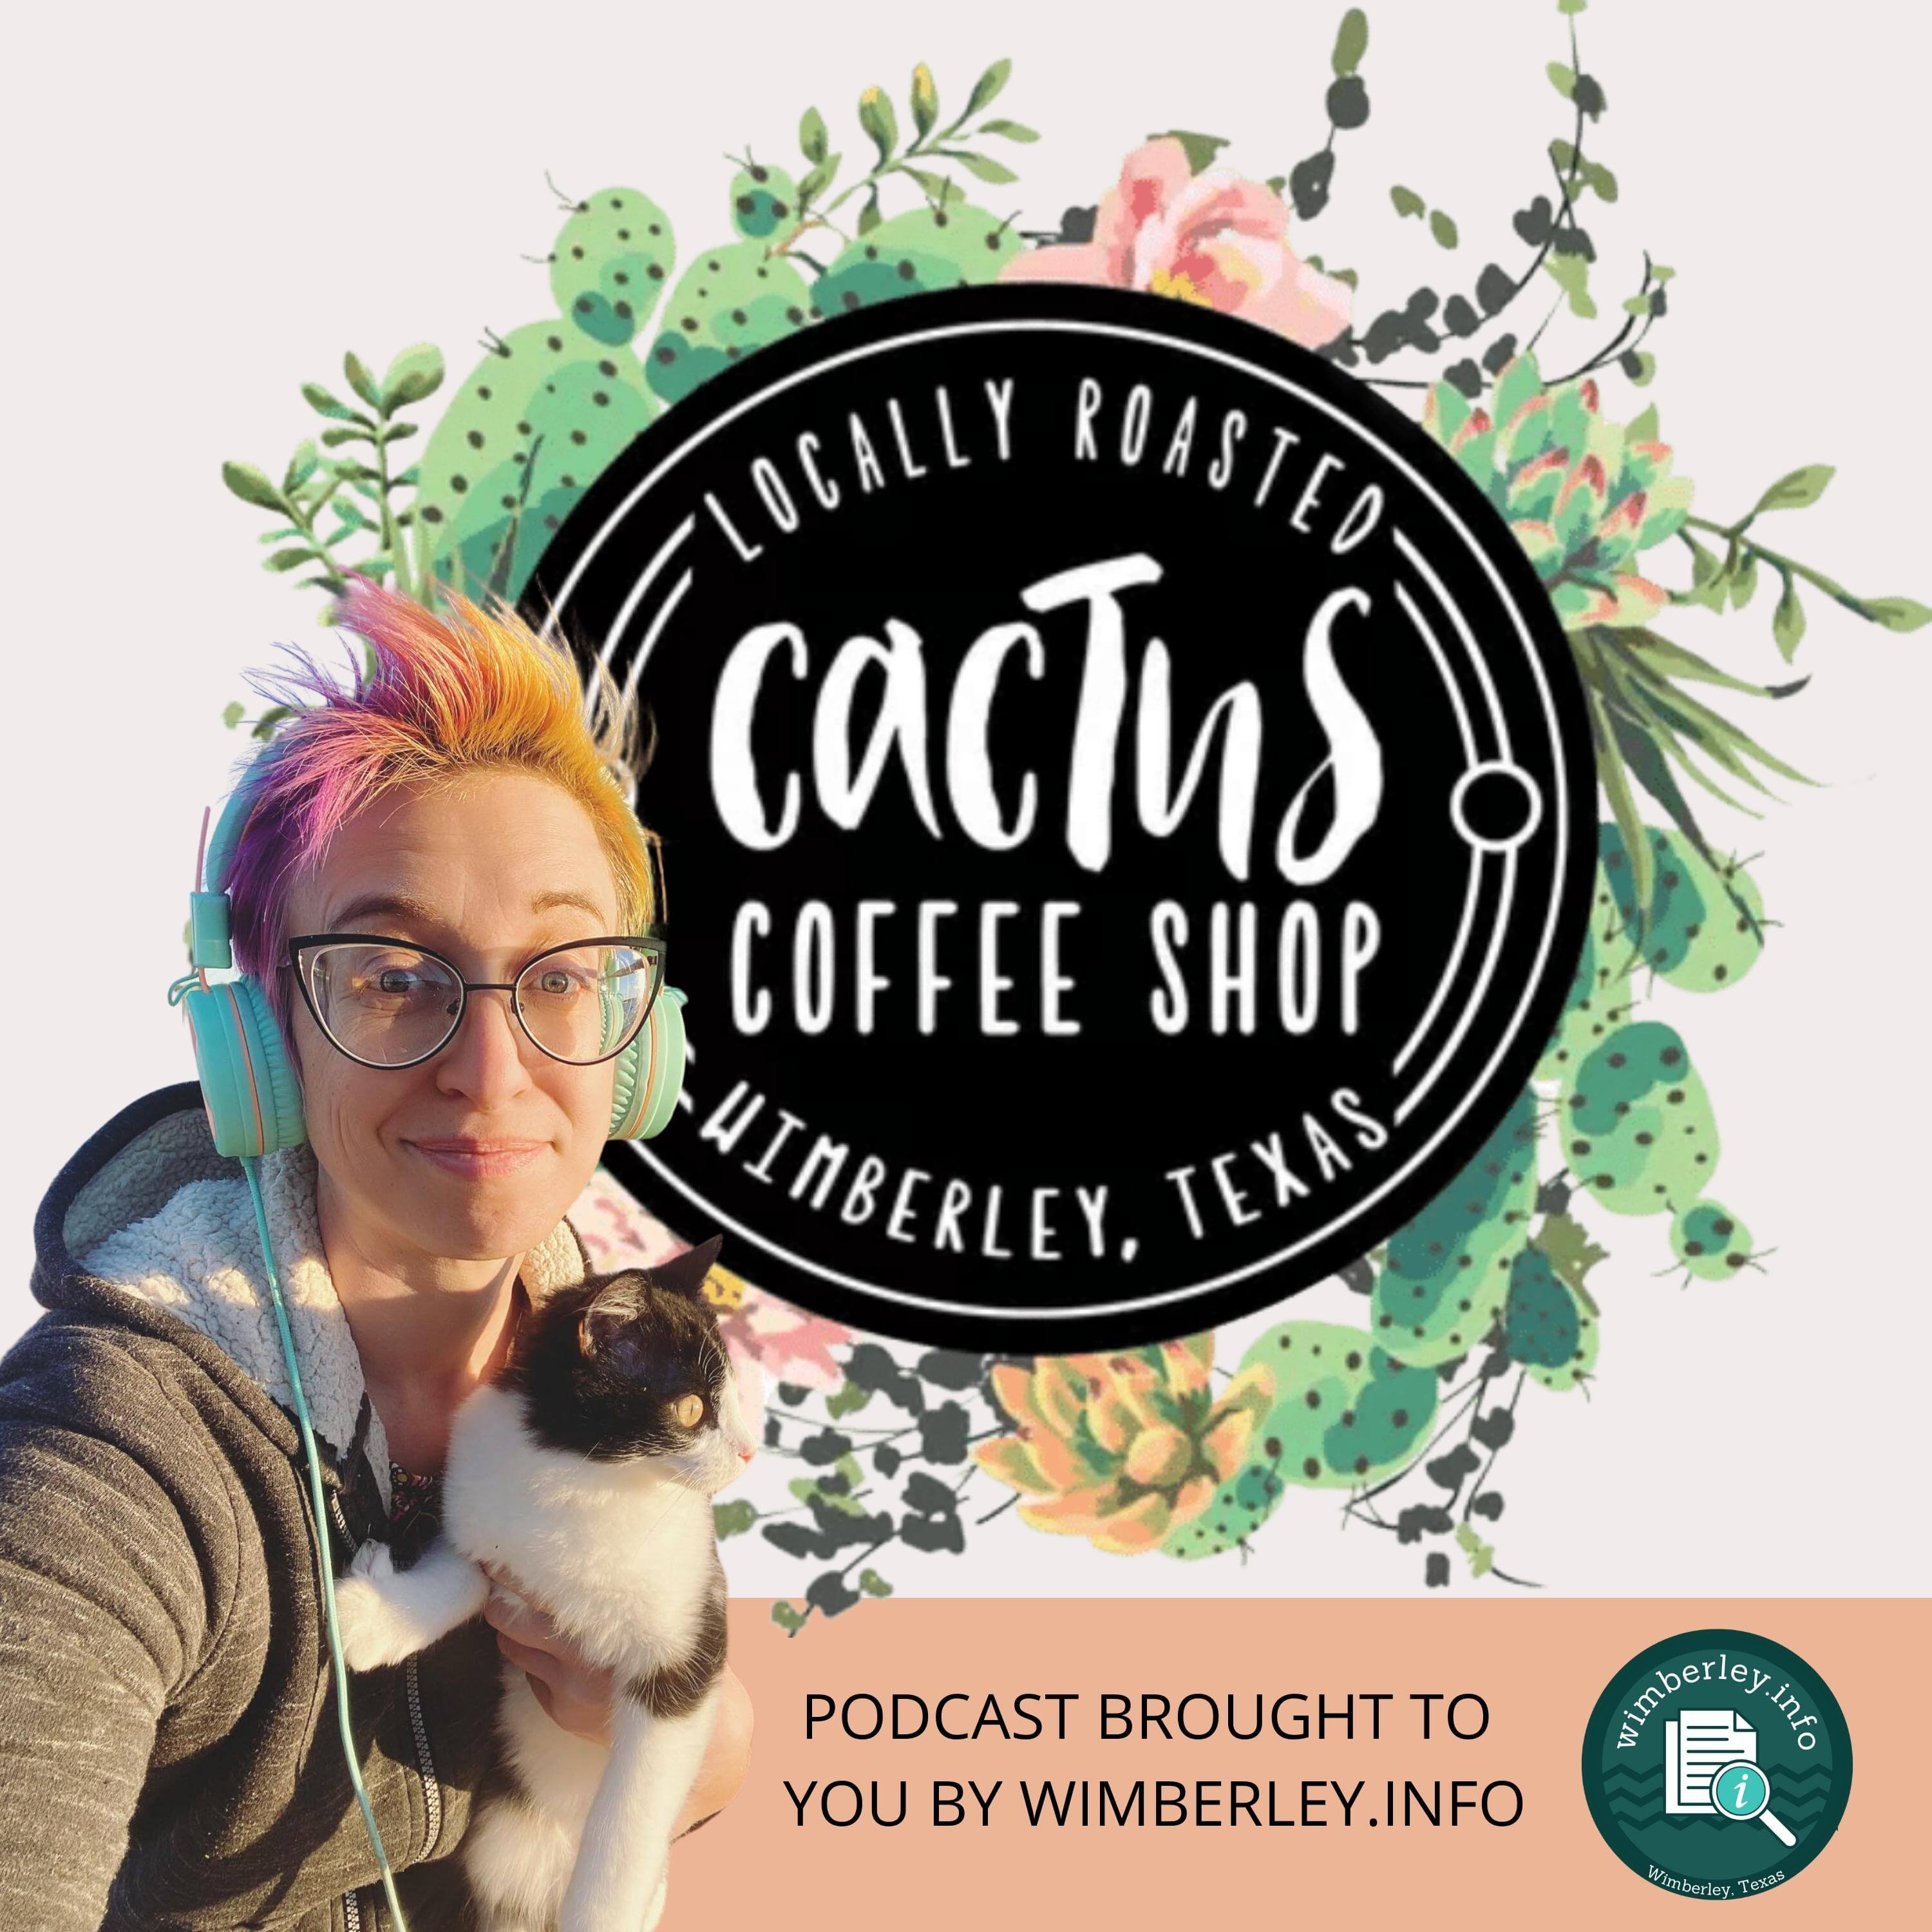 Artwork for podcast Cactus Coffee Shop